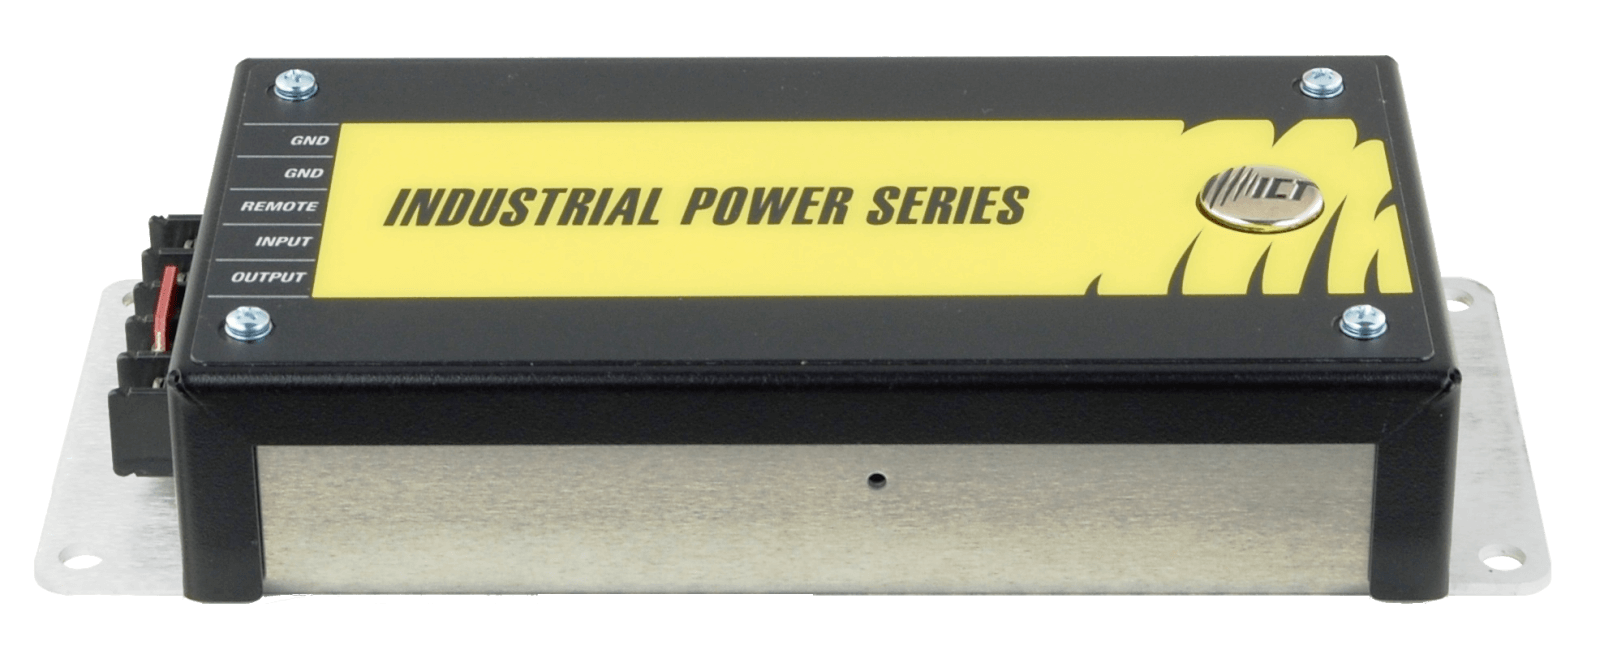 Original Image: ICT – 24V – 12V / 40 Amp Power Converter